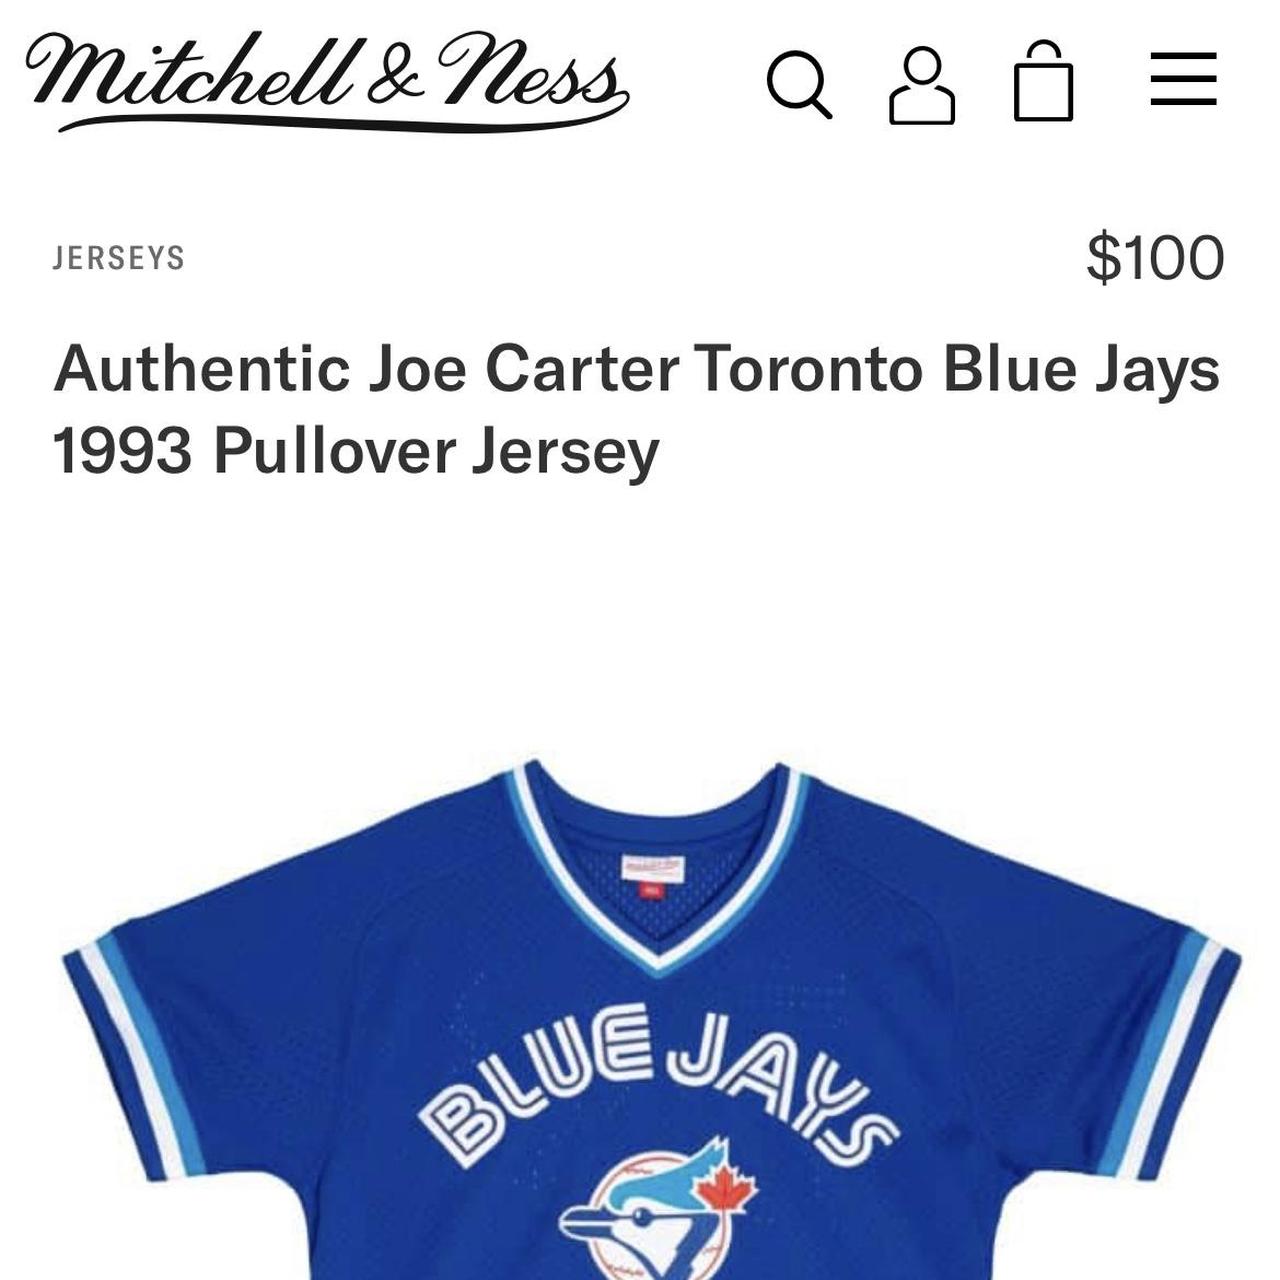 Mitchell & Ness Authentic Joe Carter Toronto Blue Jays 1993 Pullover Jersey